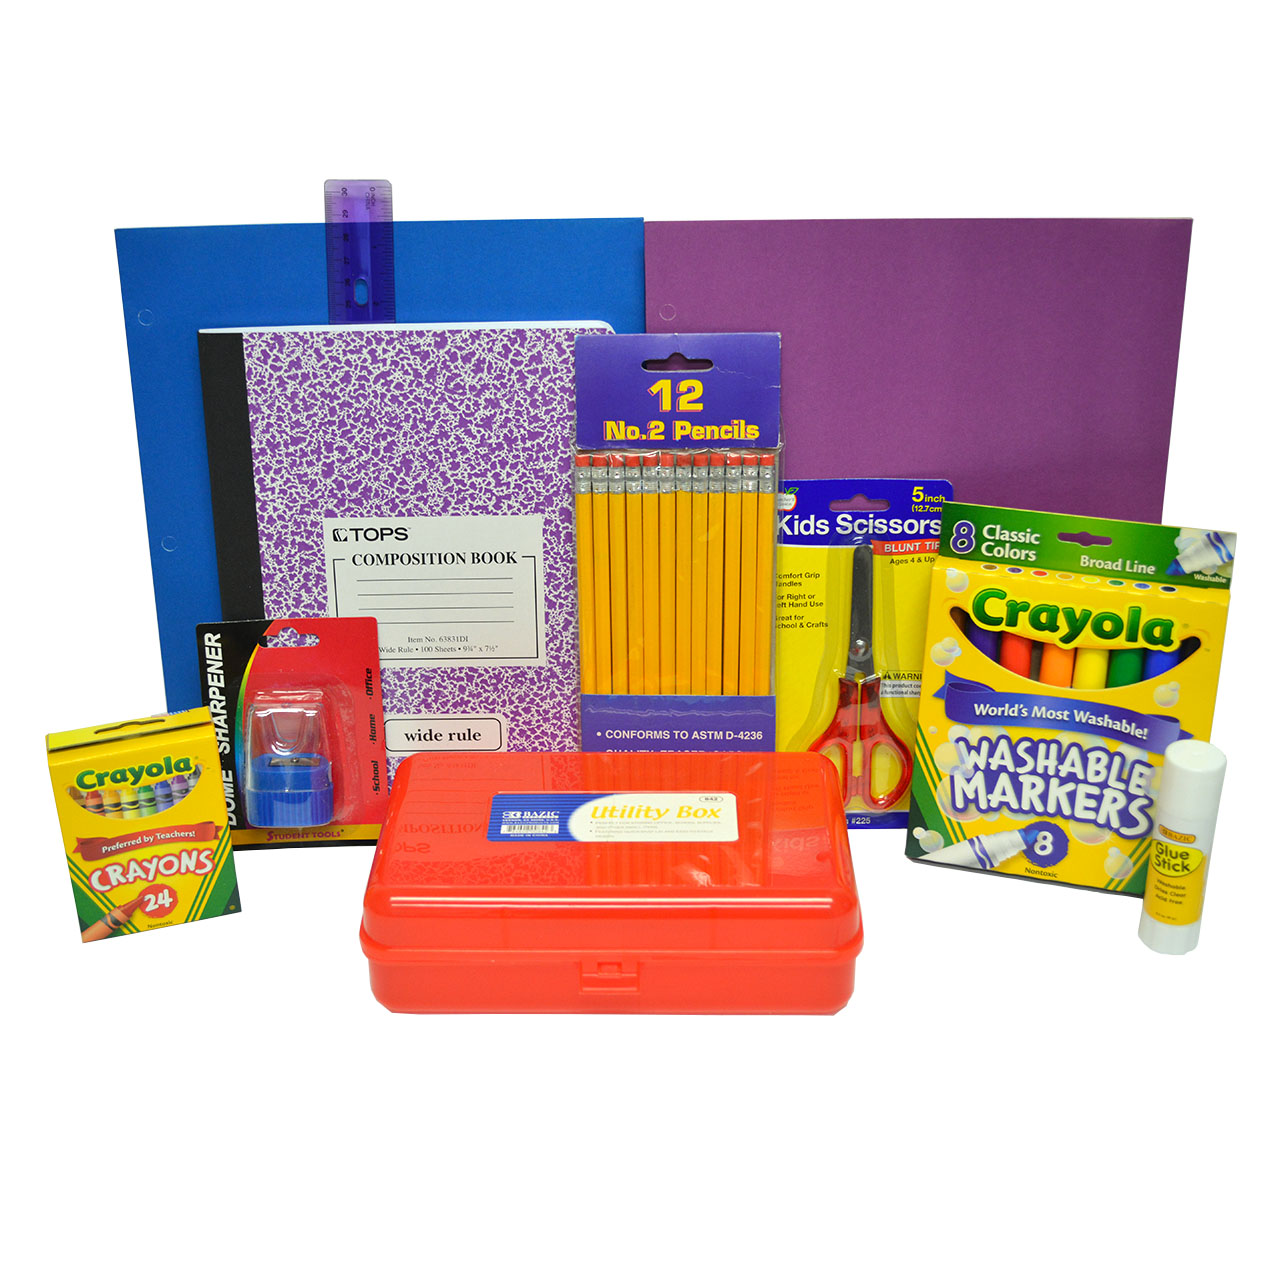 https://backpackgearinc.com/wp-content/uploads/2015/11/Kindergarten-School-Supply-Kit-SSK-KIN-CR.jpg